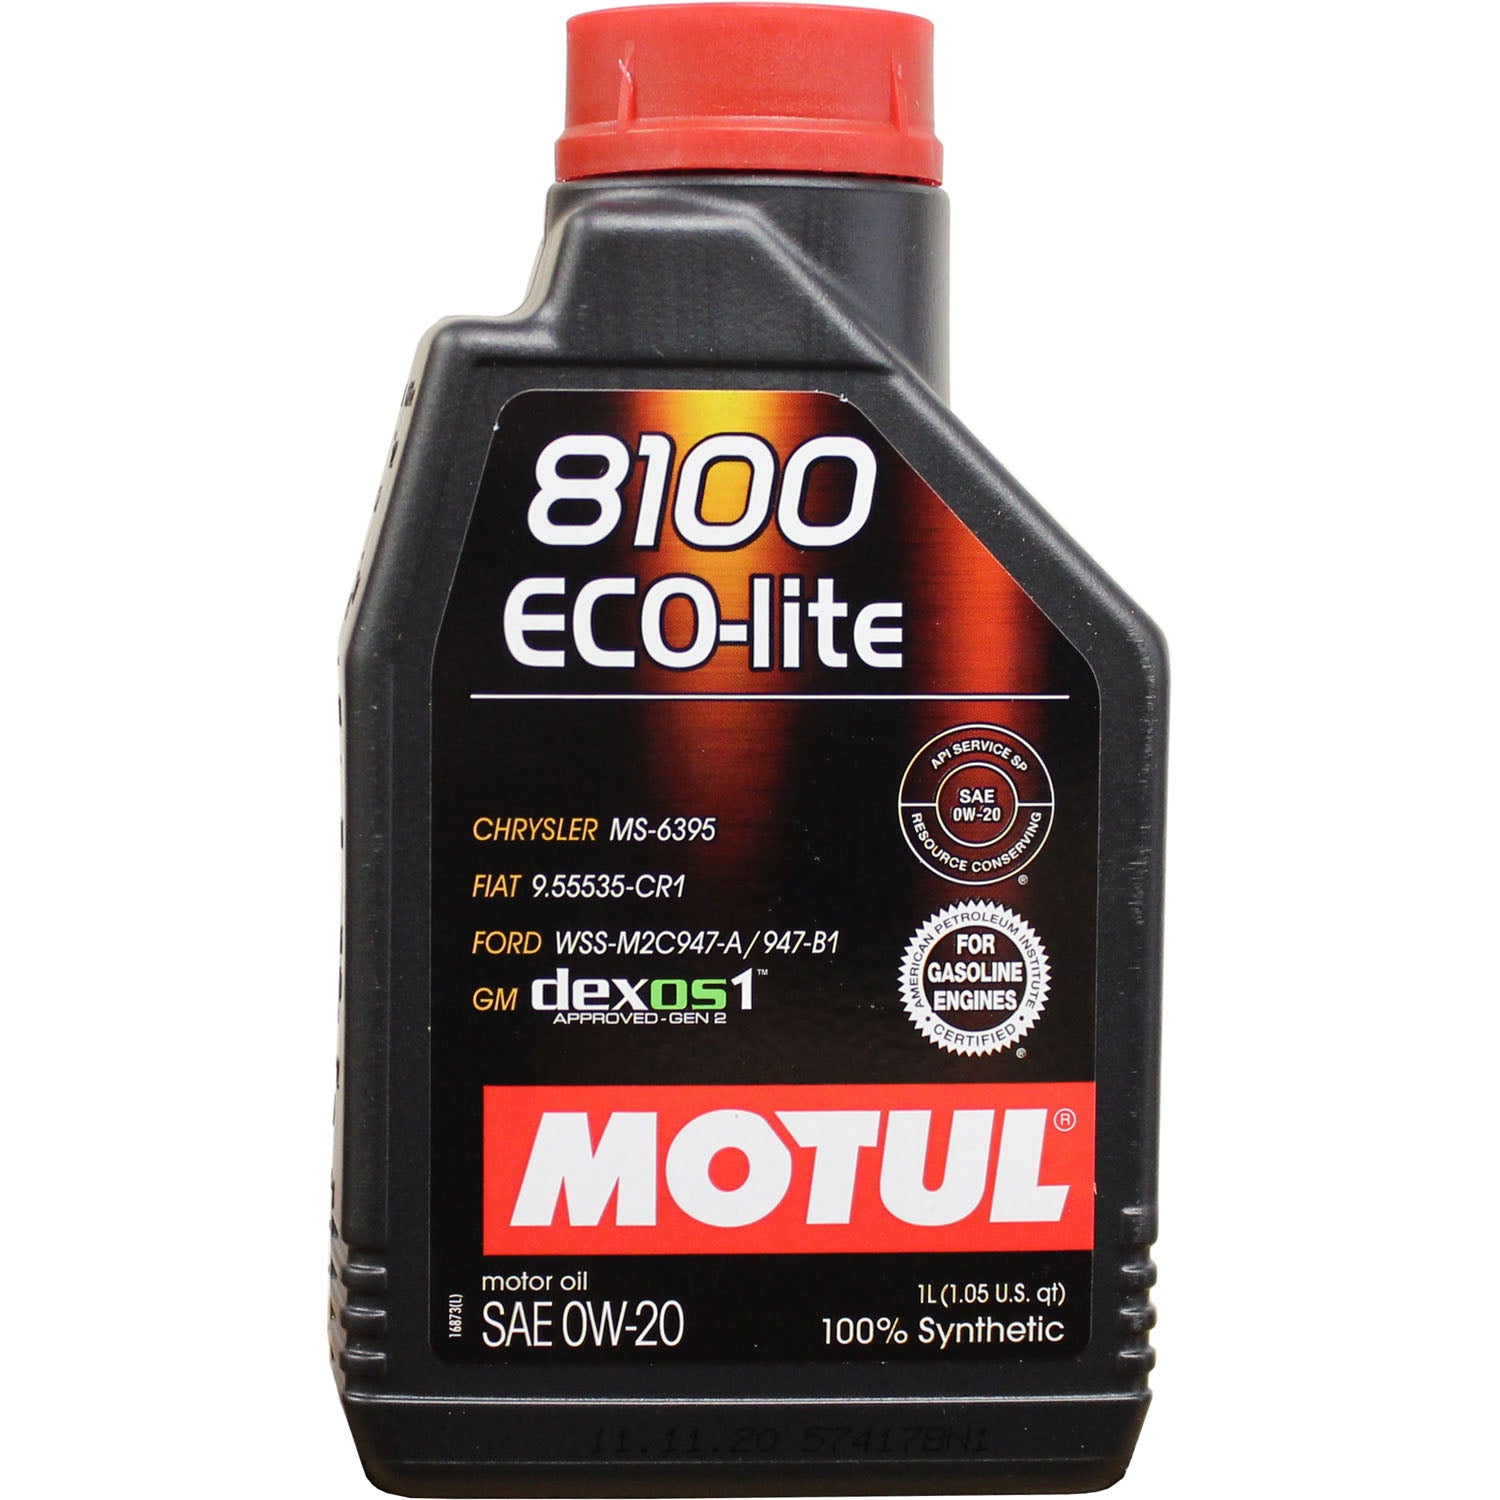 Motul 8100 Eco-Lite Synthetic Motor Oil 0W20 - 1 Liter